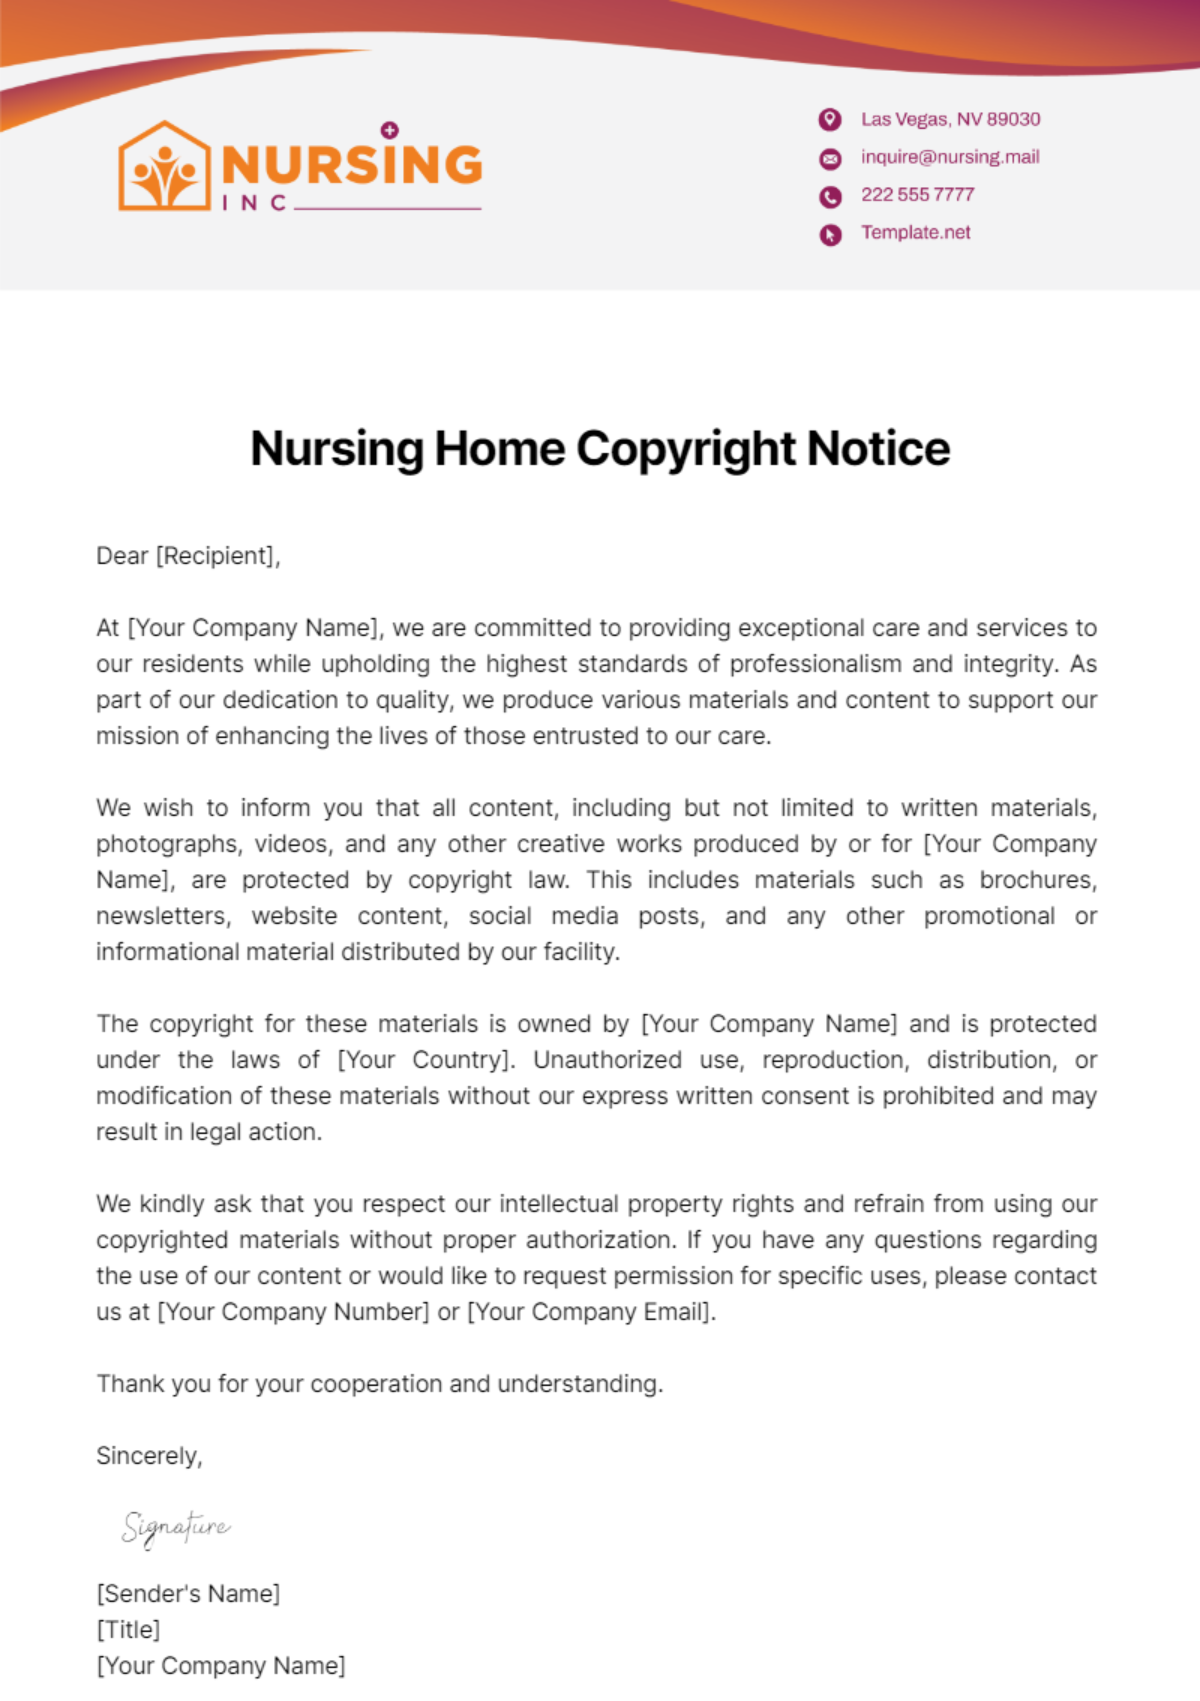 Nursing Home Copyright Notice Template